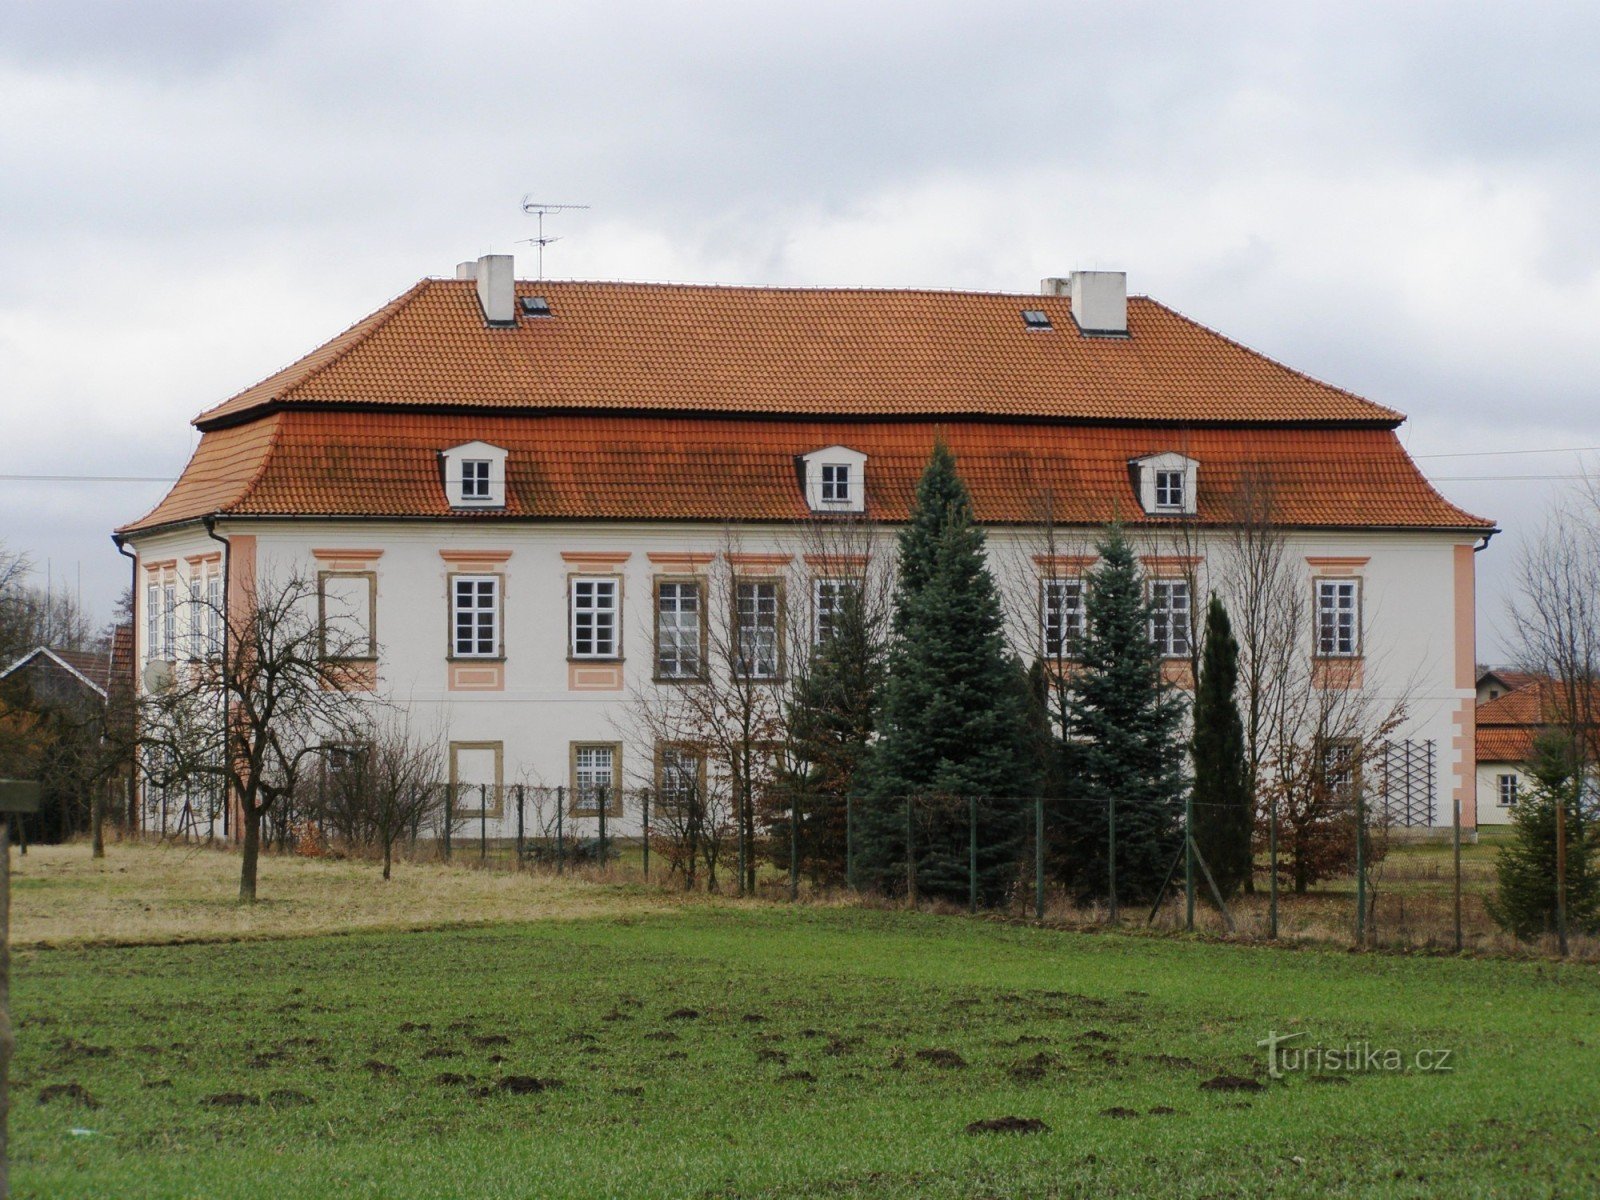 Sobčice - lâu đài